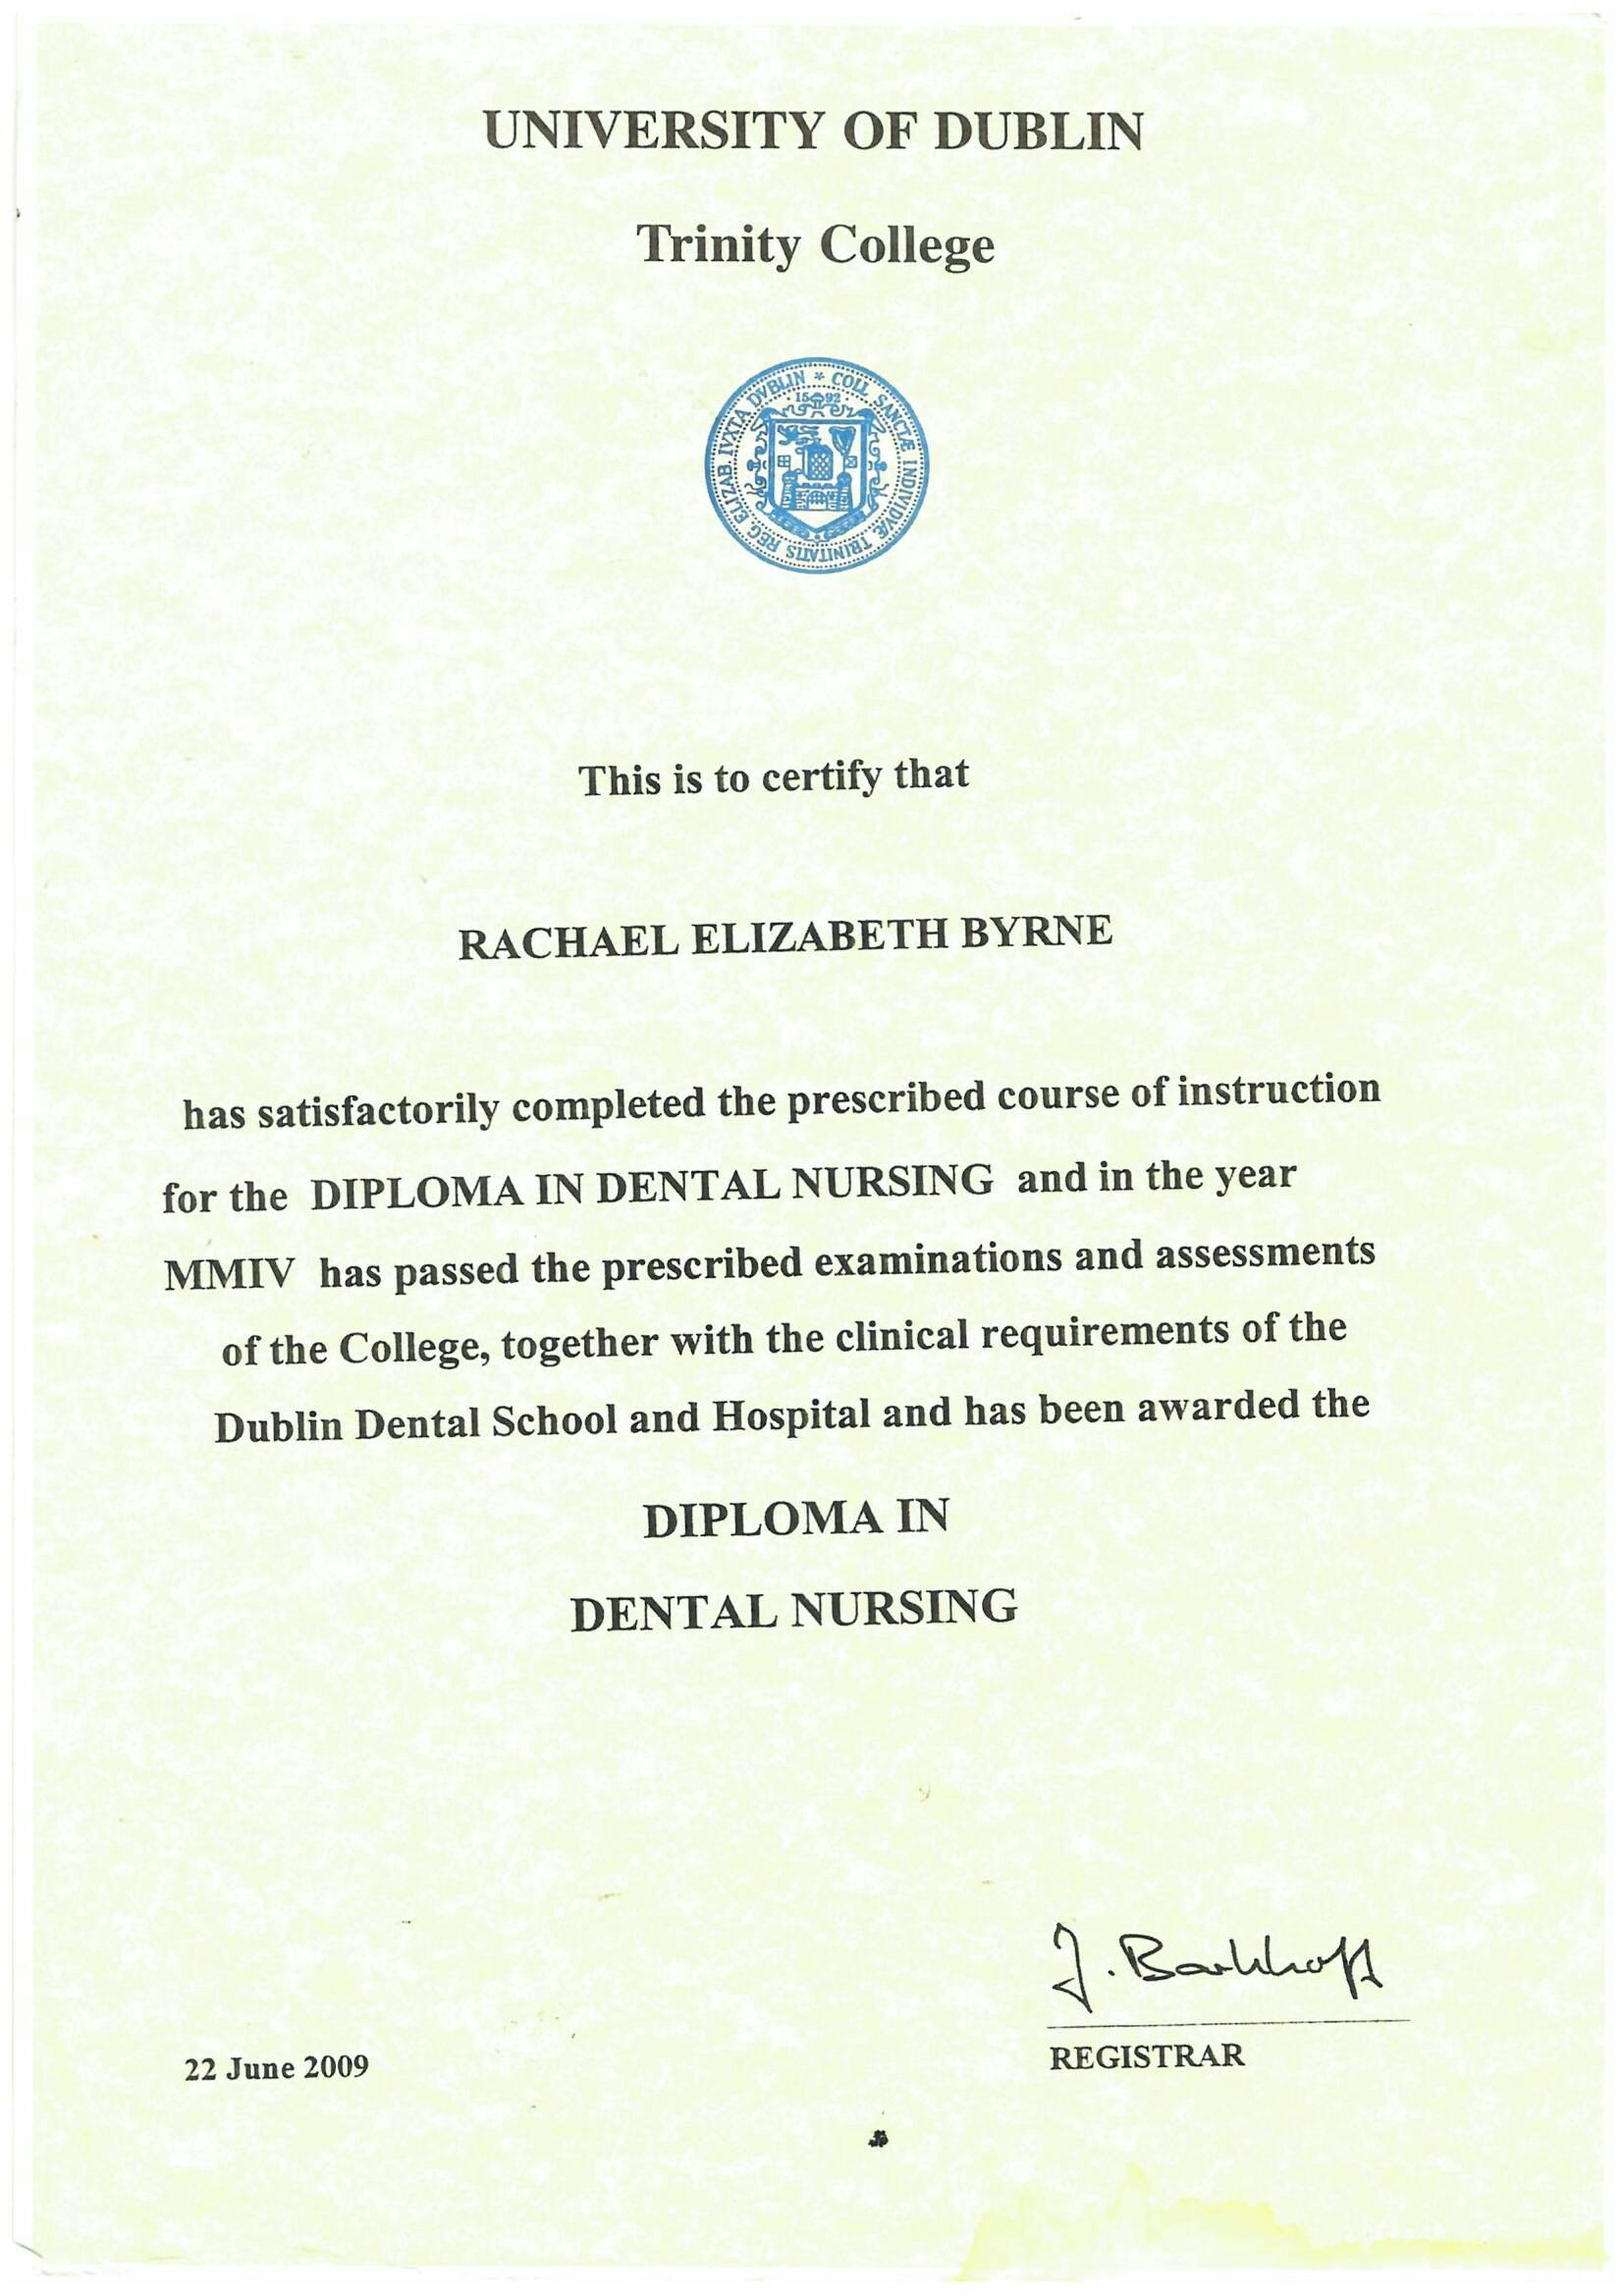 Diploma in Dental Nursing